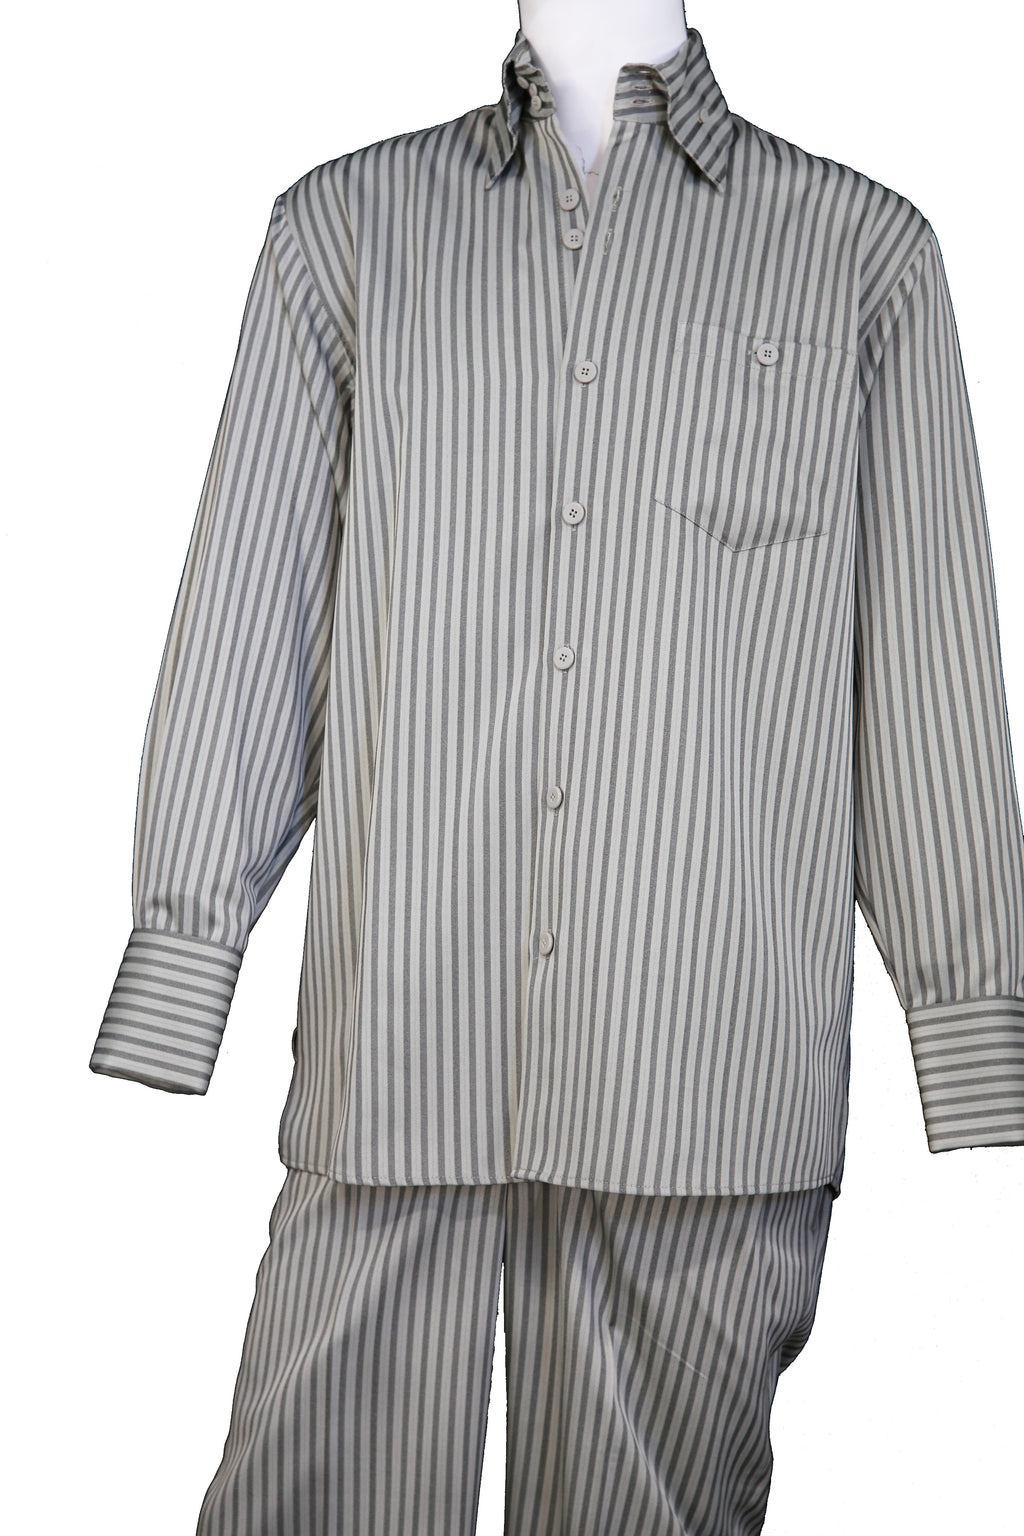 Victorian Stripes Long Sleeve 2pc Walking Suit Set Olive